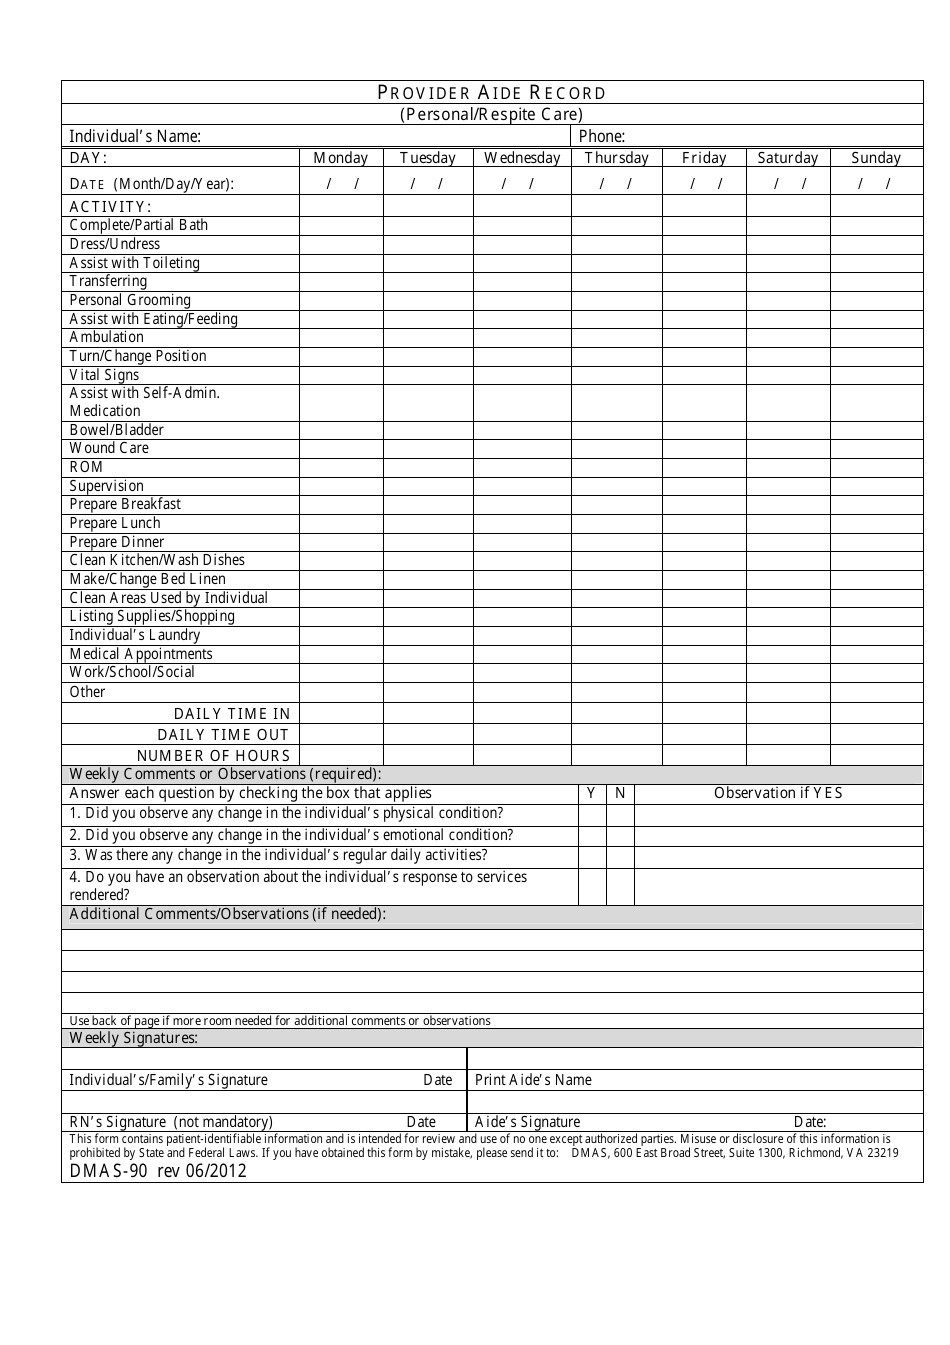 Form DMAS-90 Provider Aide Record (Personal / Respite Care) - Virginia, Page 1